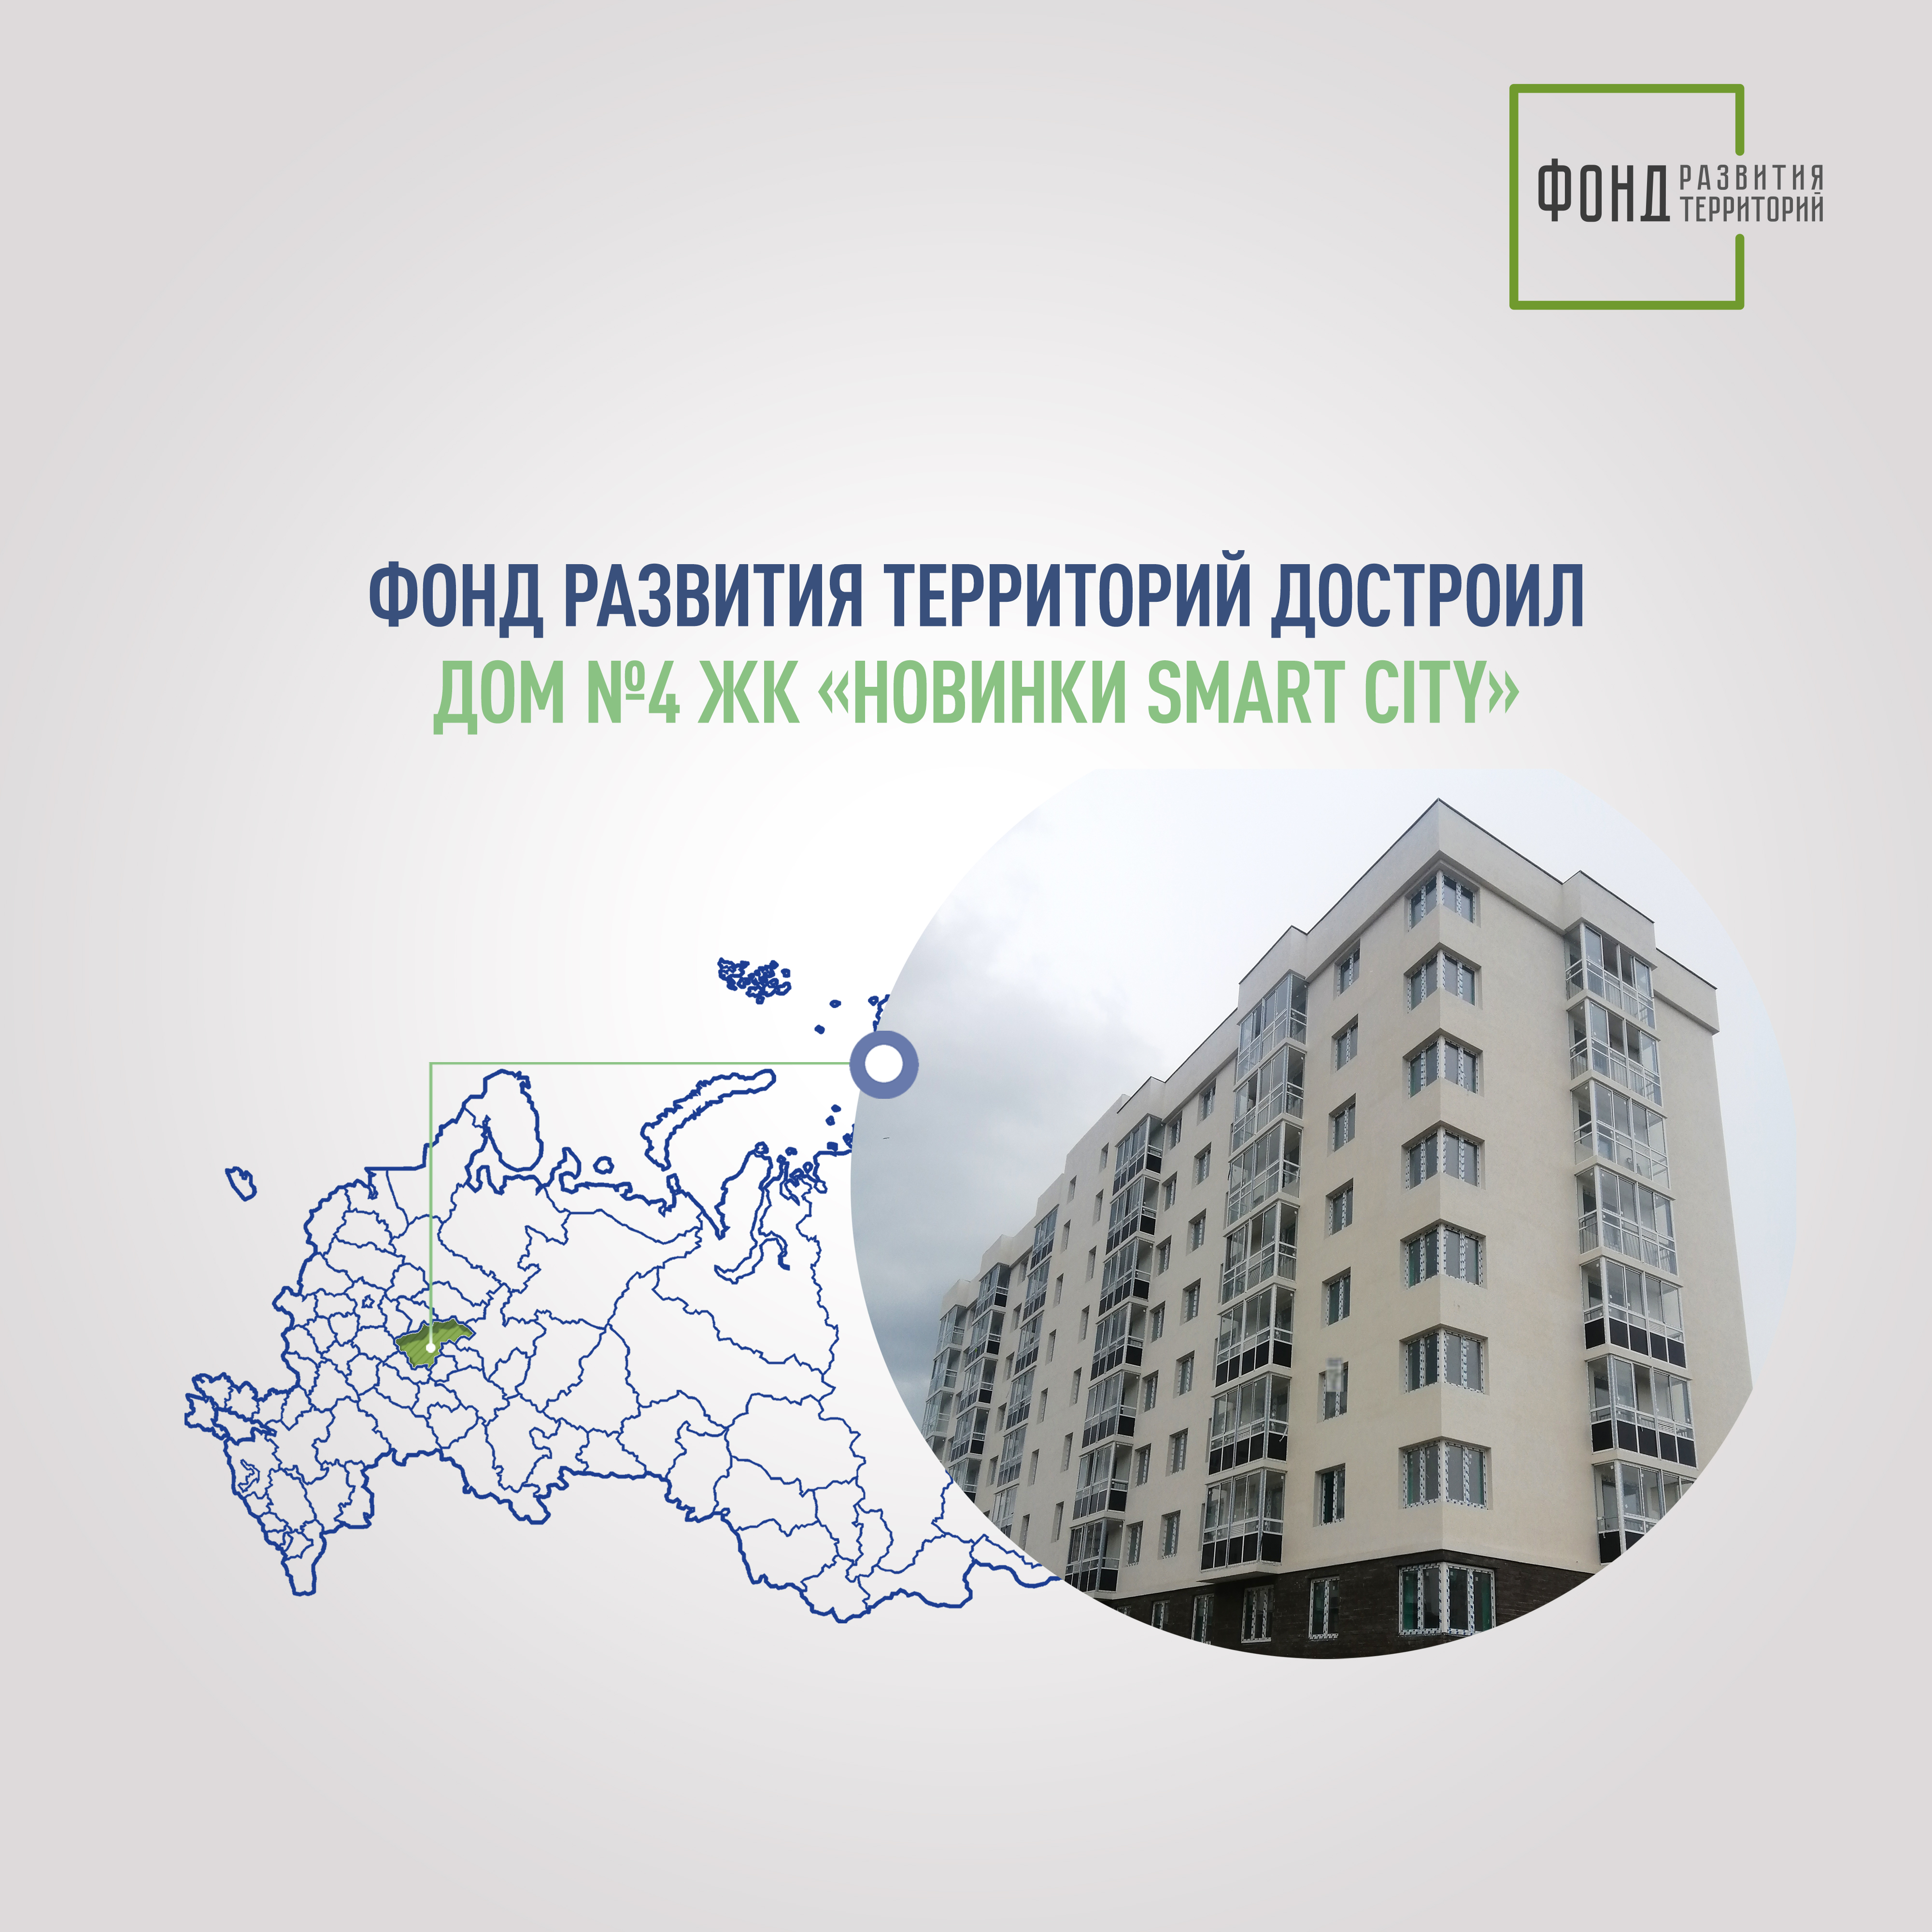 Фонд развития территорий достроил дом №4 ЖК «Новинки Smart City» 